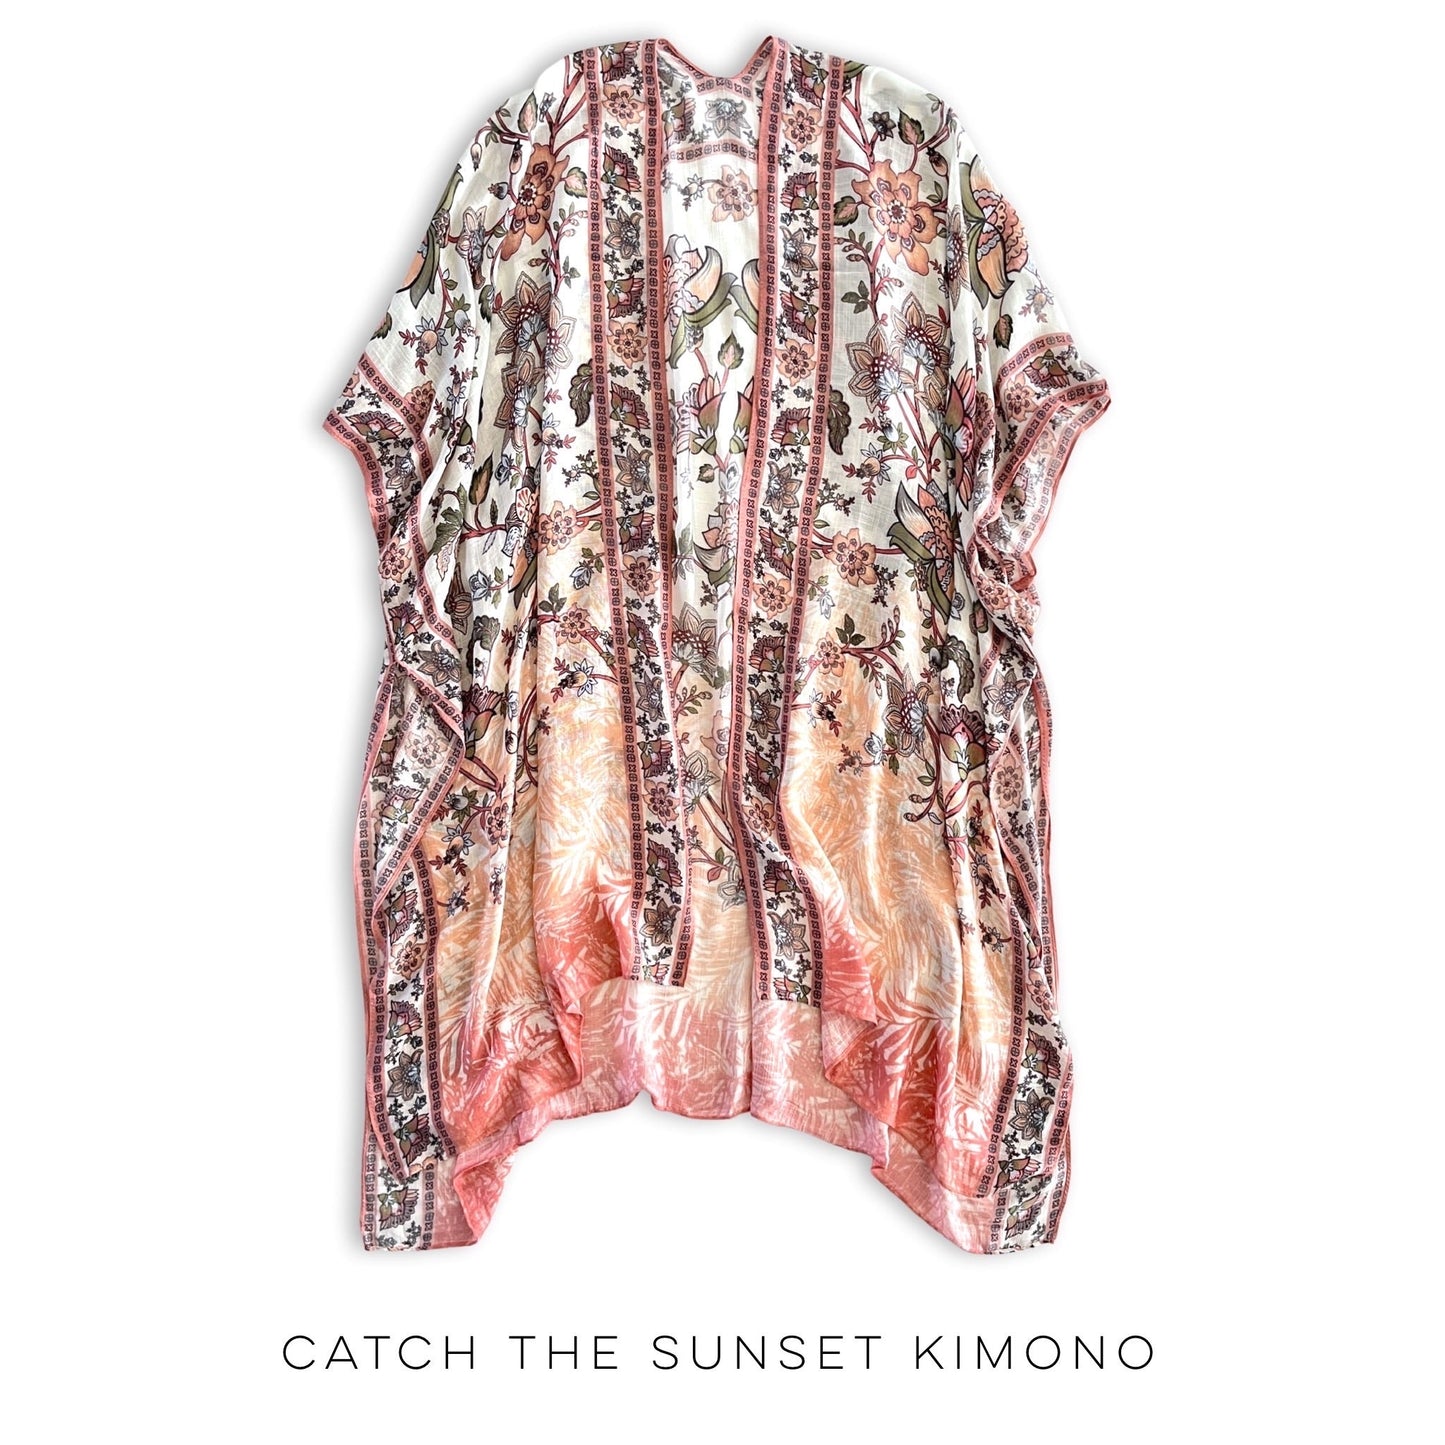 Catch the Sunset Kimono